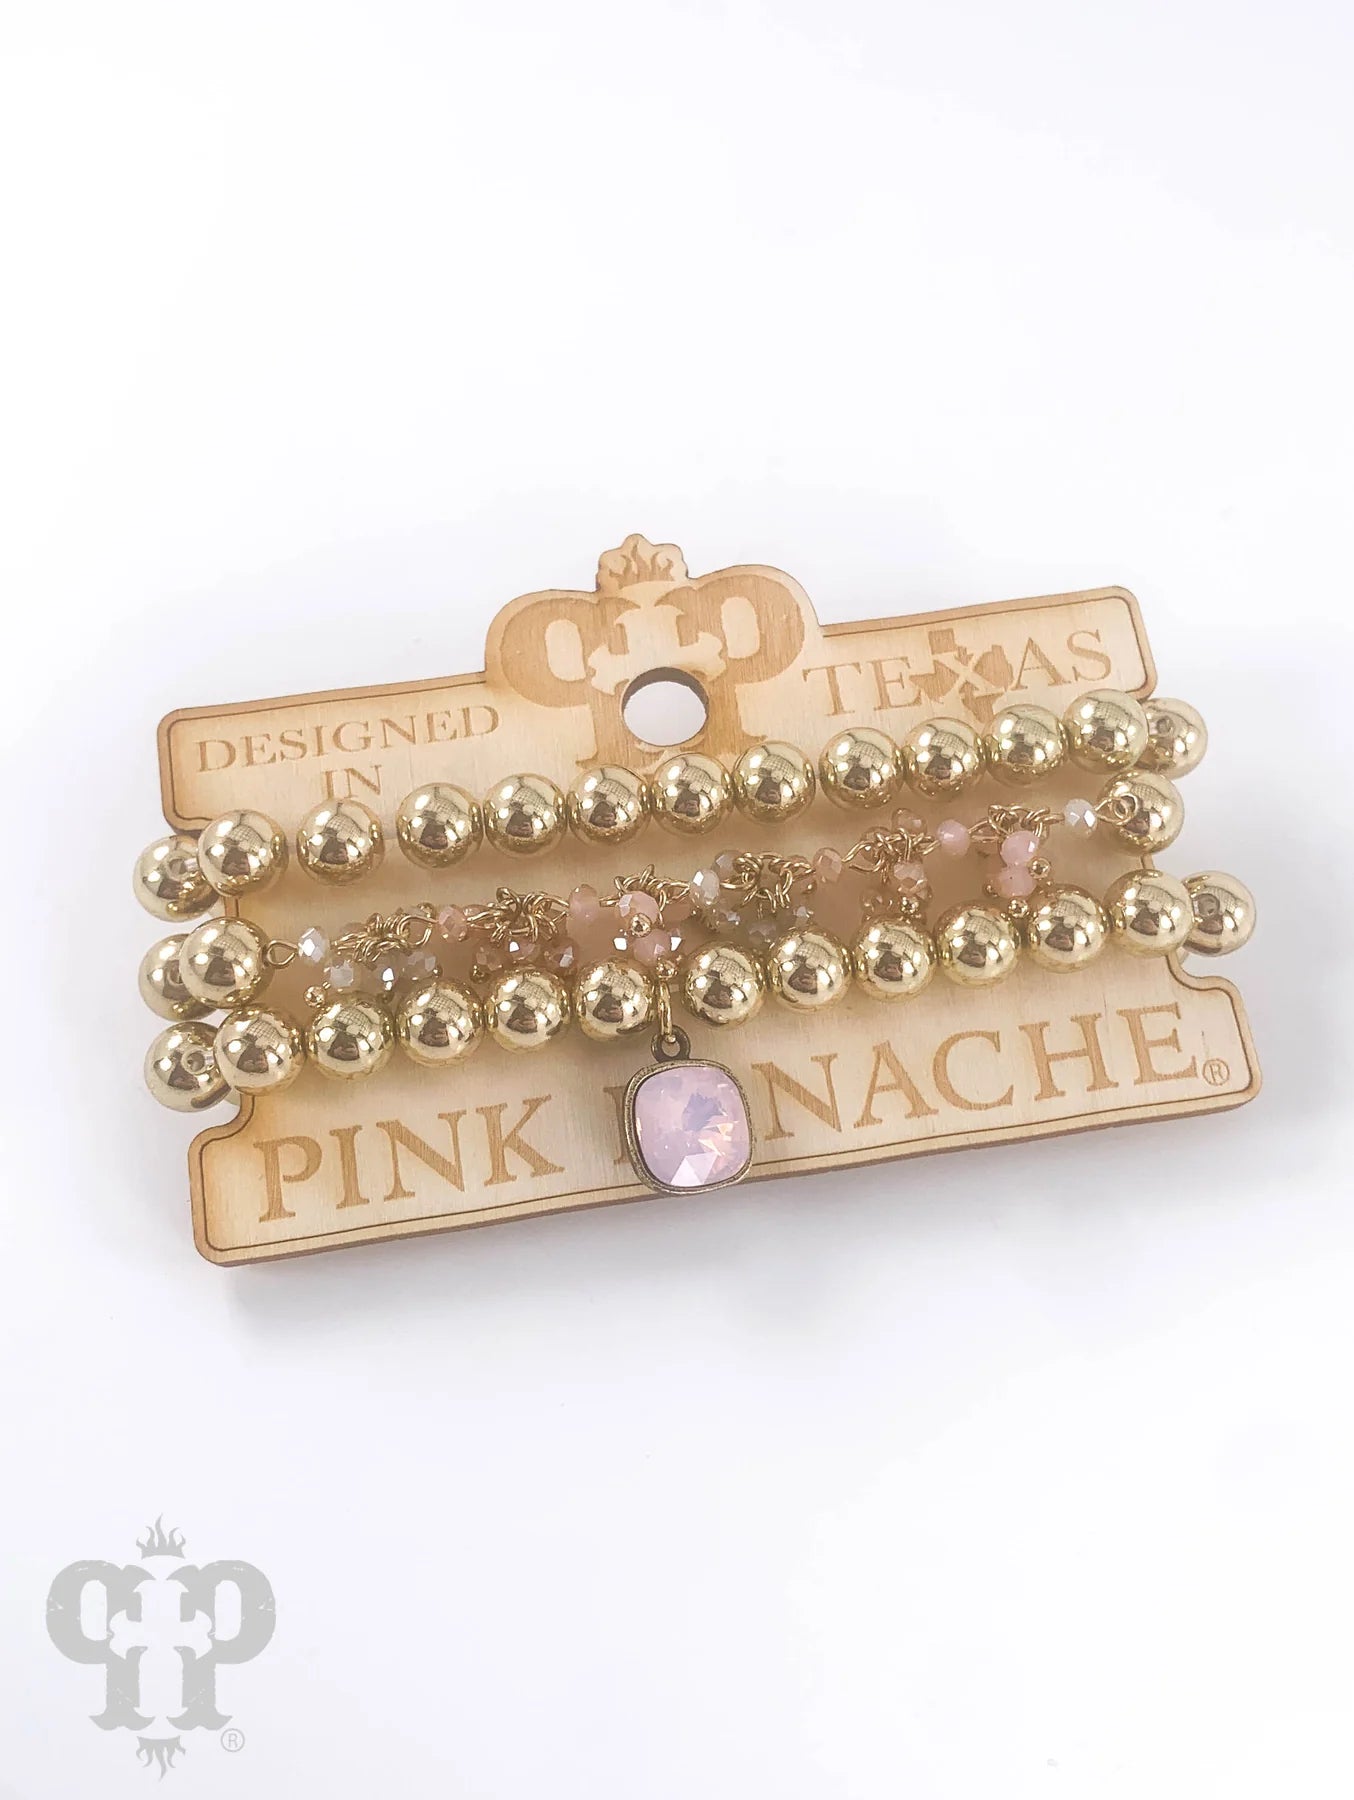 Petal pink pink panache bracelet set